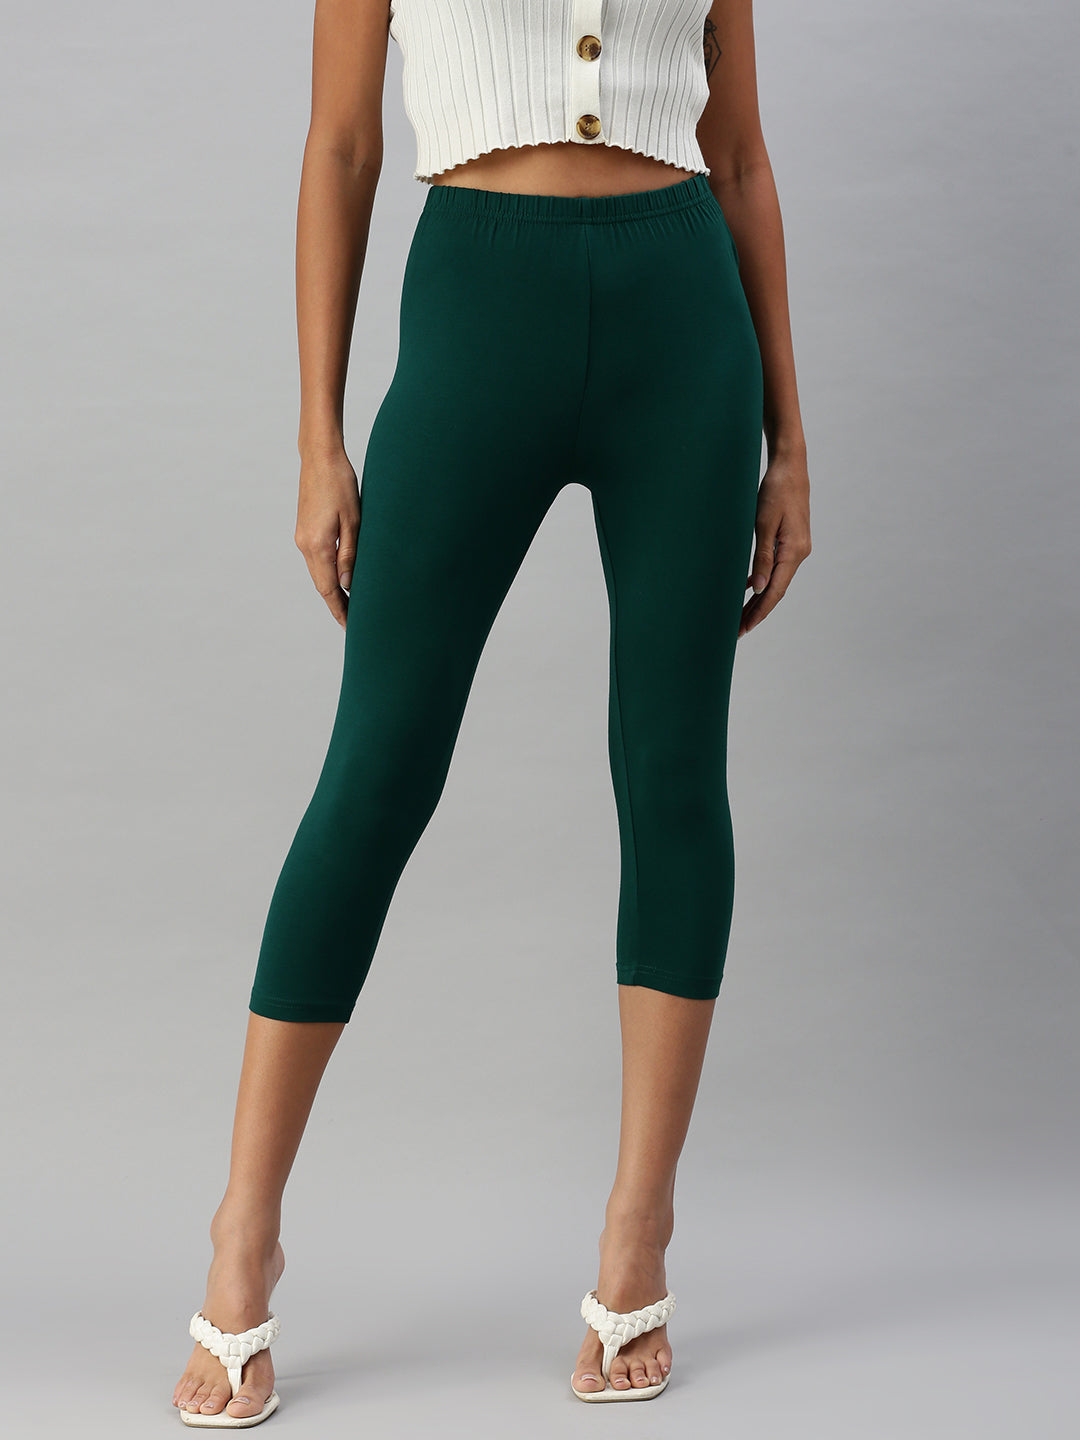 Shop Prisma's Bottle Green Capri Leggings for Comfortable and Stylish  Workout Wear